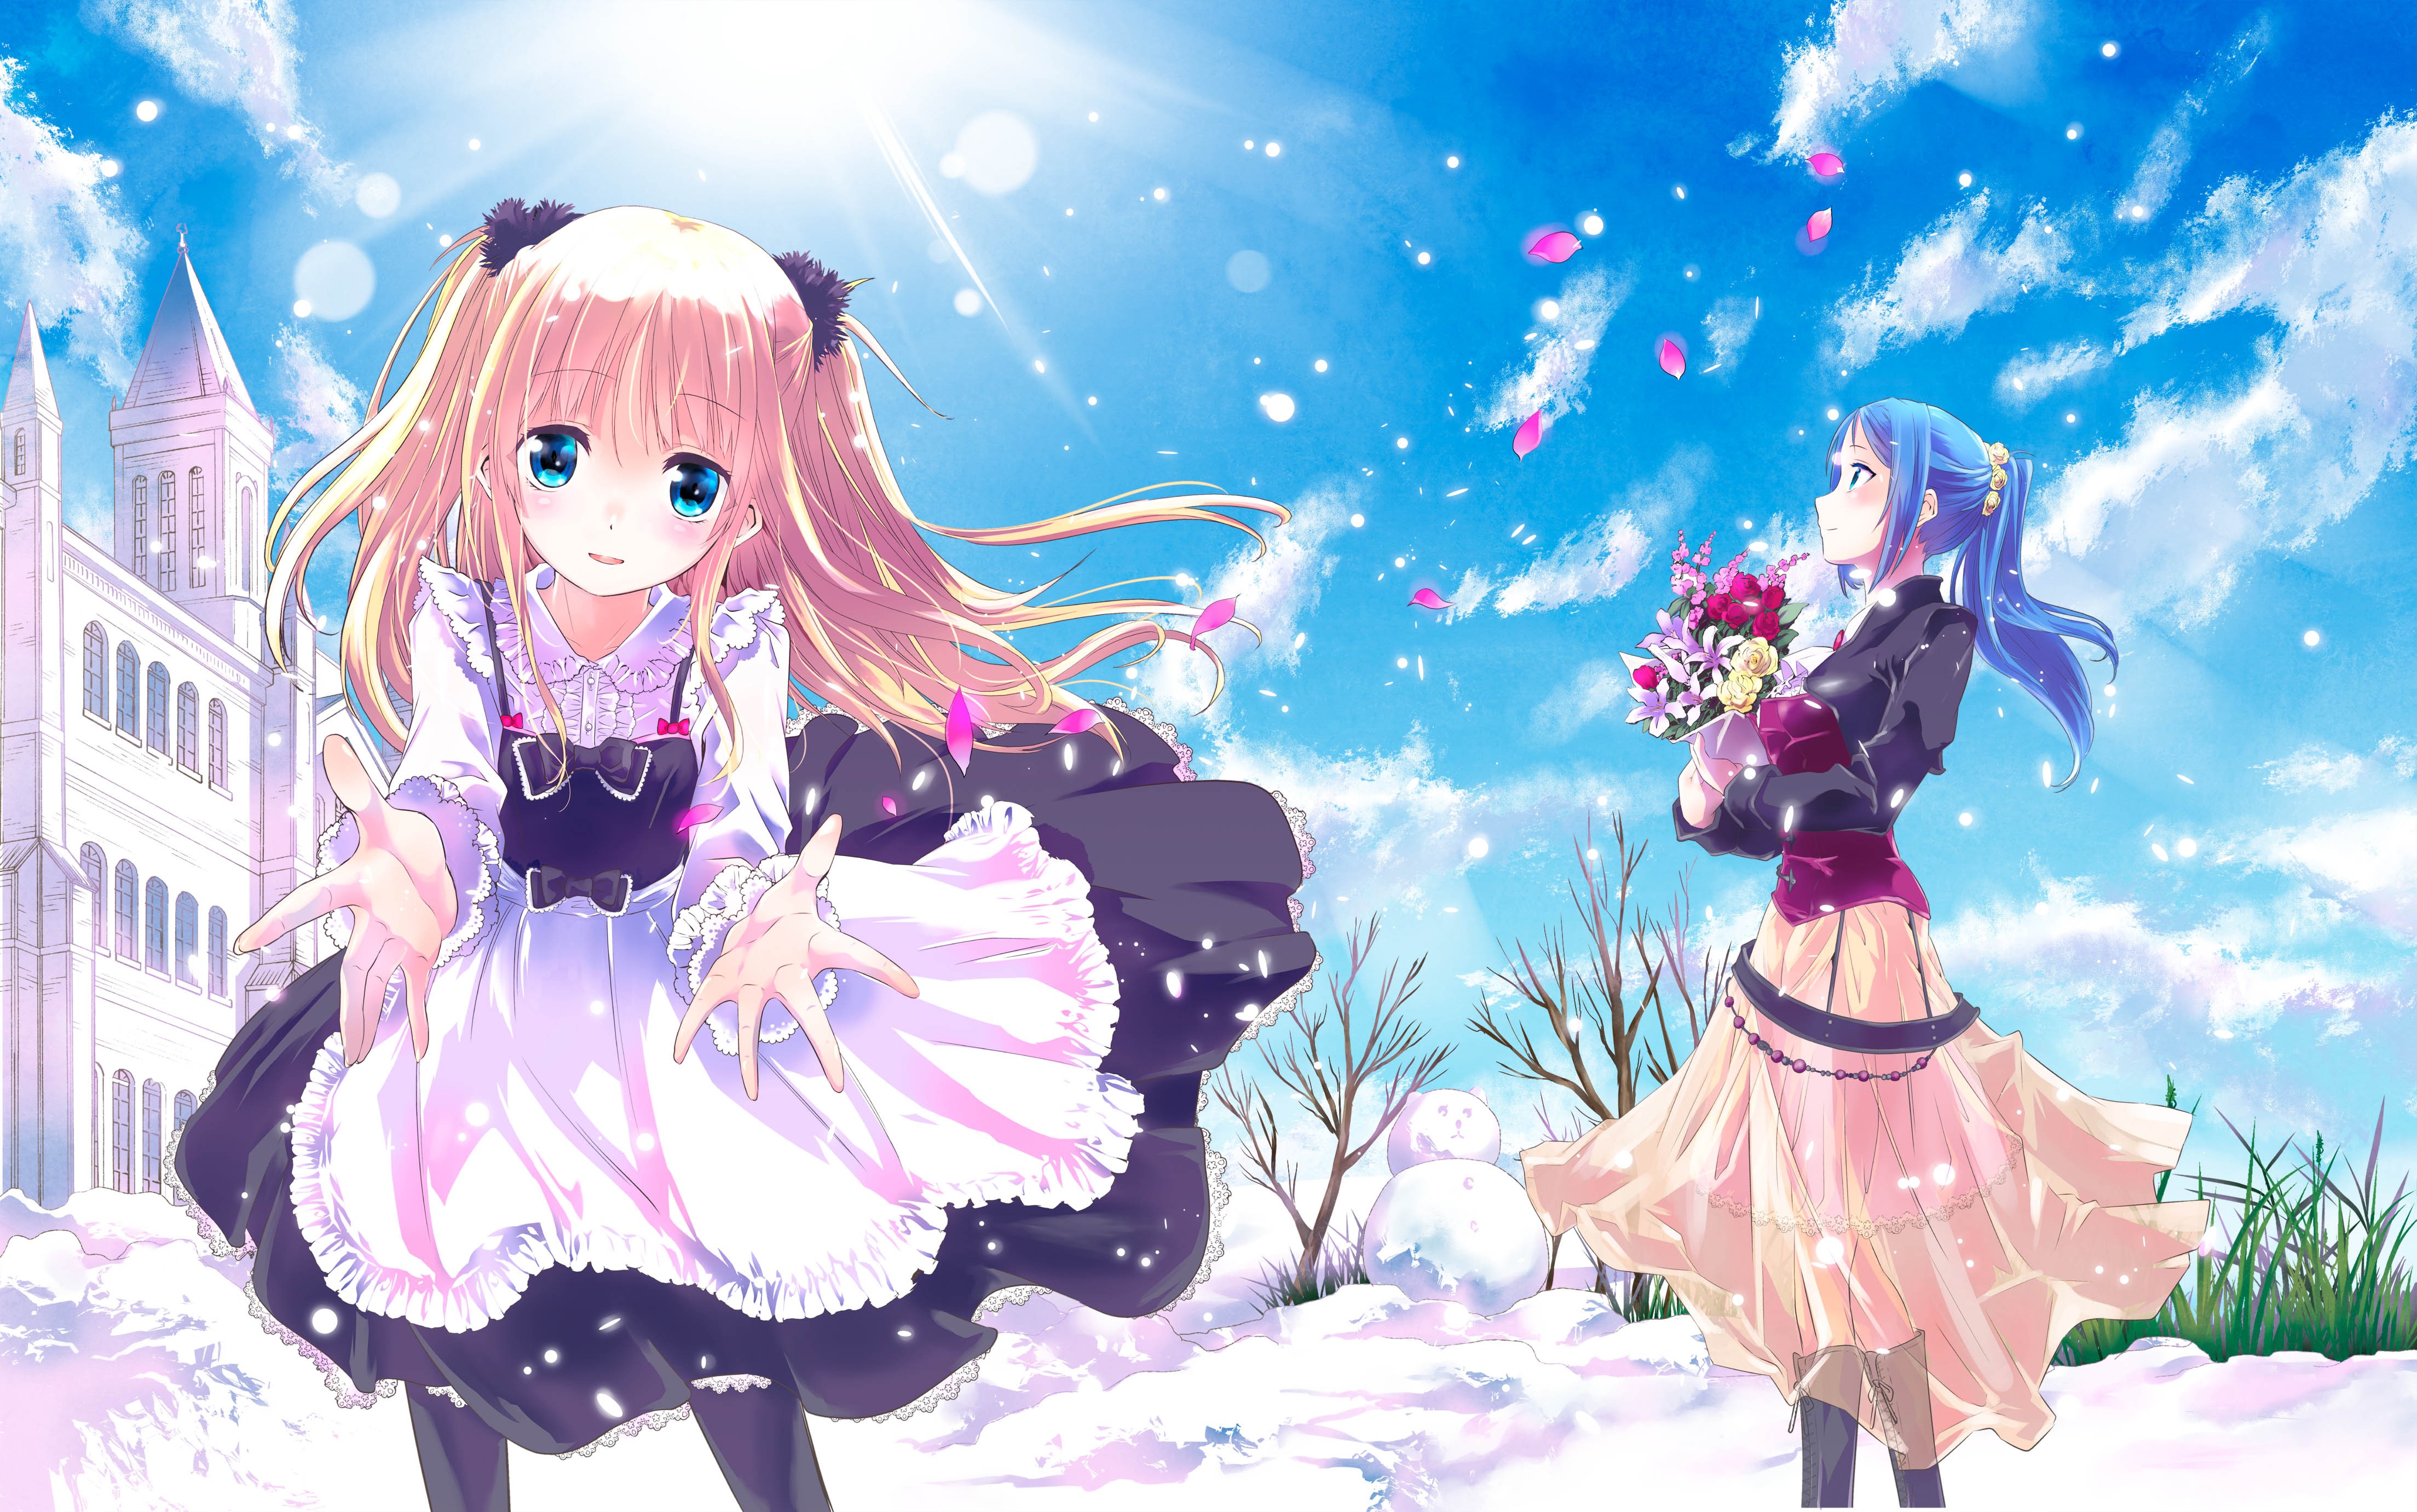 Anime 4415x2762 anime girls anime blue eyes snow winter blue hair dress two women women outdoors sky clouds flowers bouquet plants